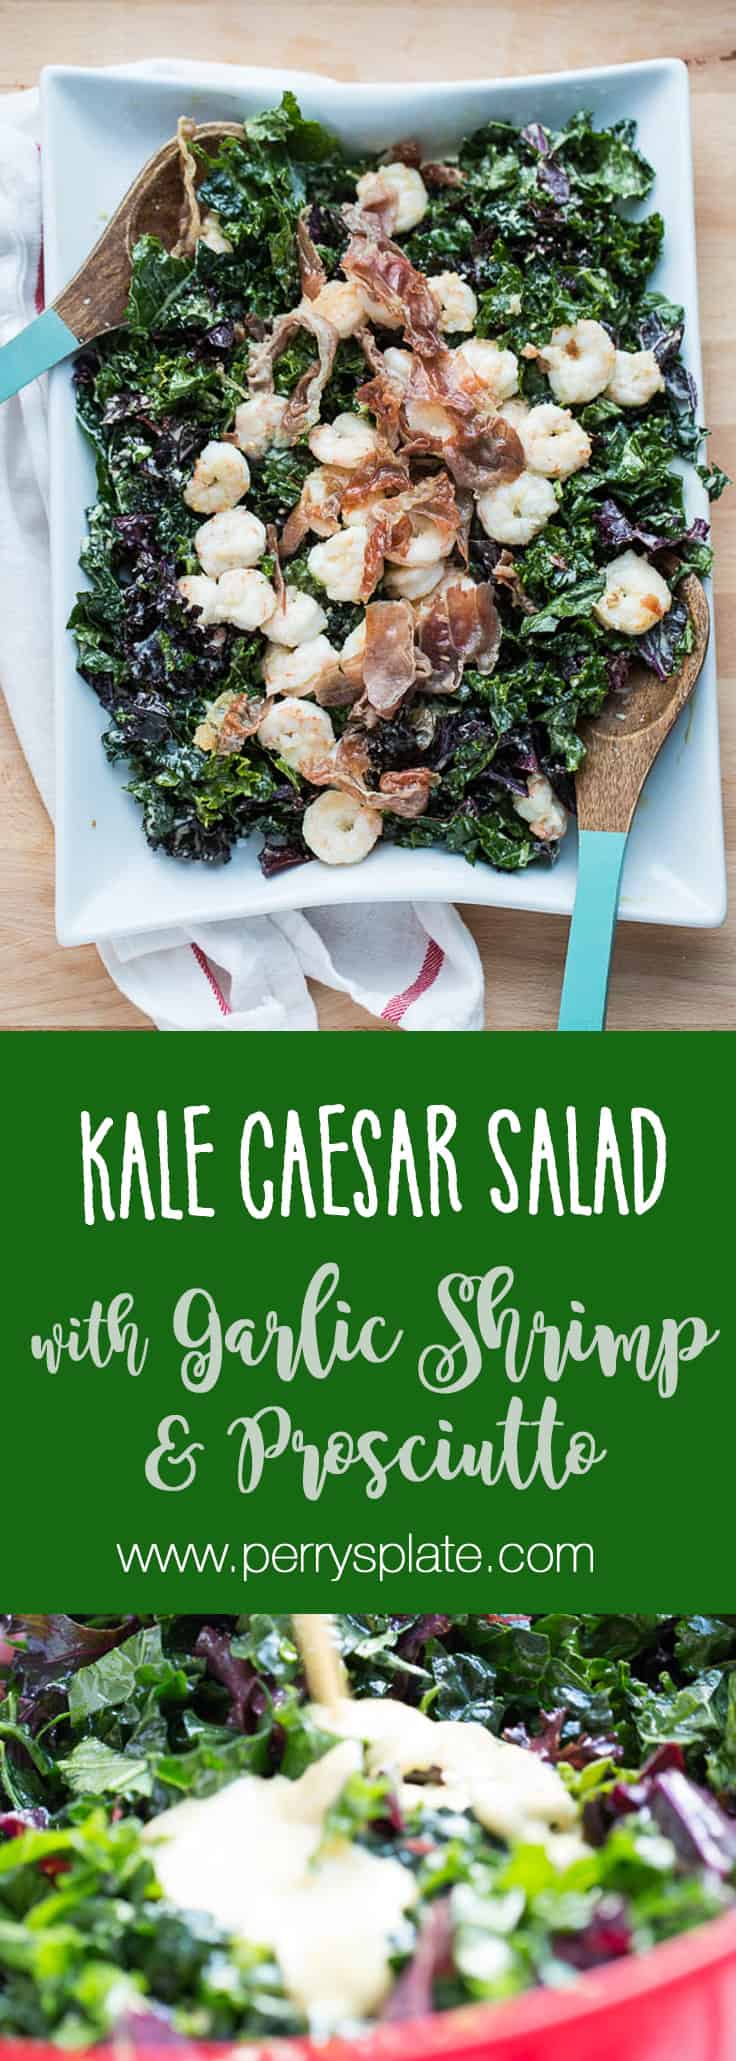 Kale Caesar Salad with Garlic Shrimp & Prosciutto | Whole30 recipes | paleo recipes | healthy caesar salad | perrysplate.com